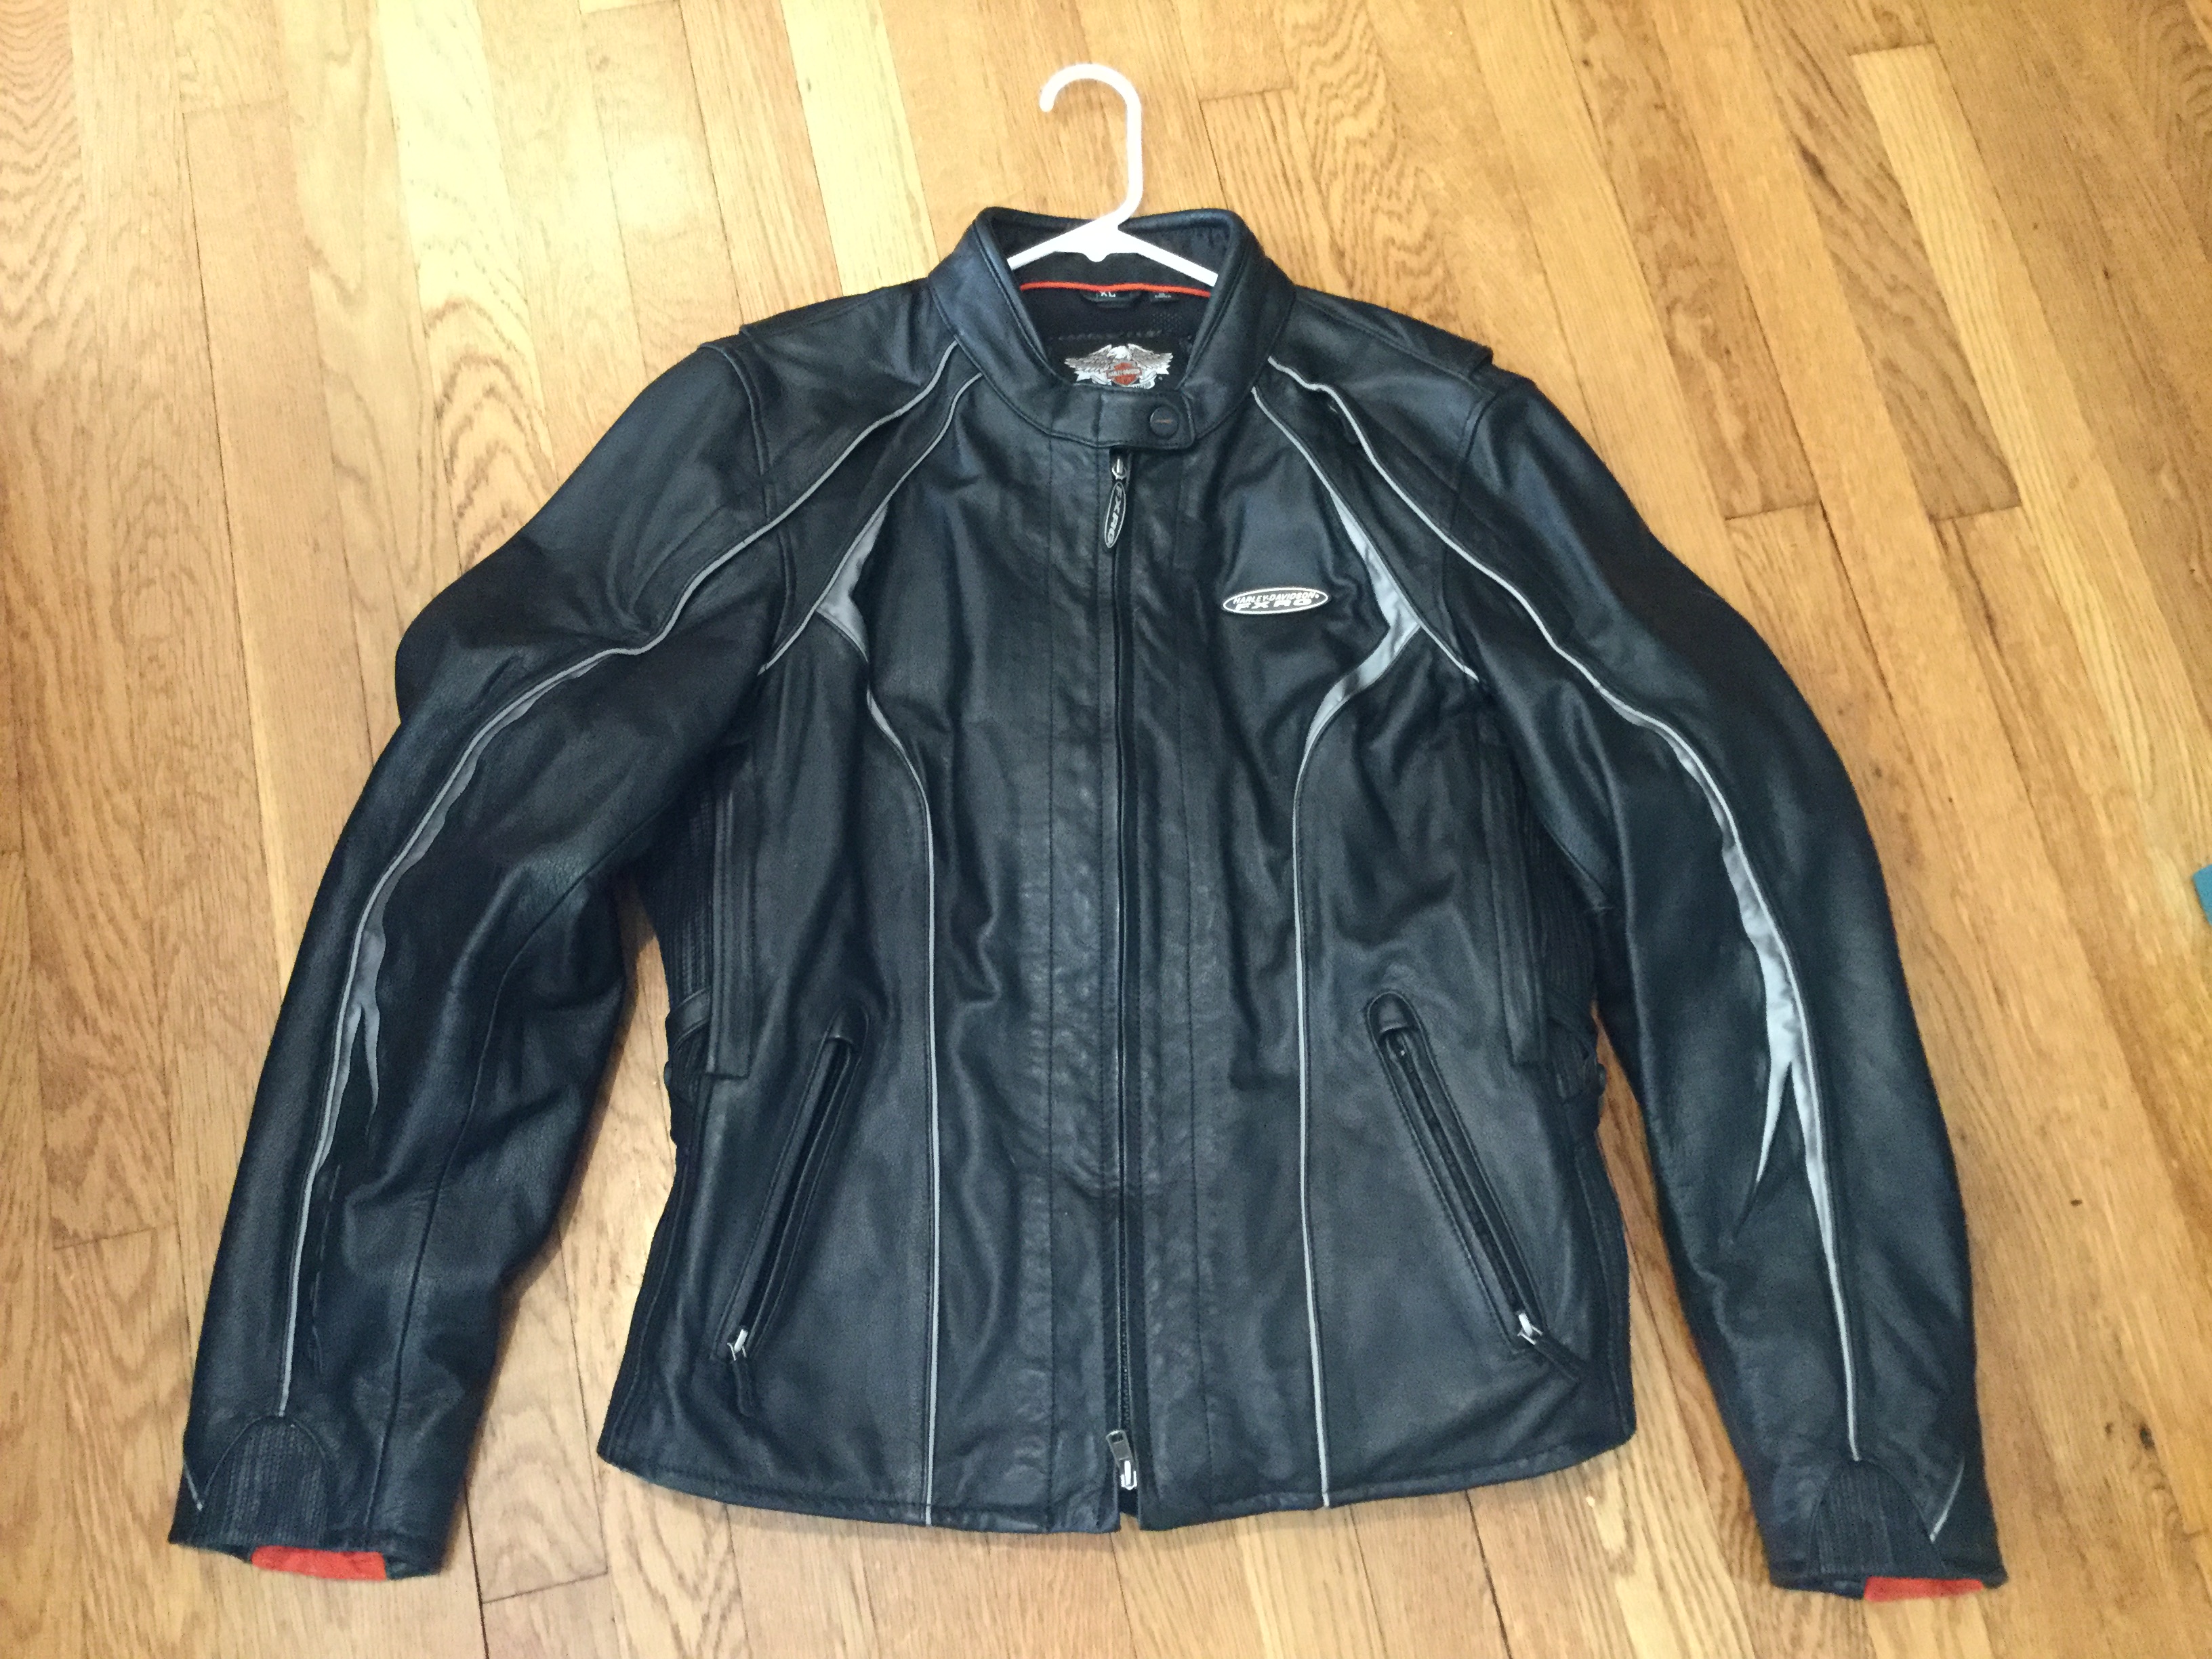 Women's Harley Davidson FXRG Leather Jacket size XL - Harley Davidson ...